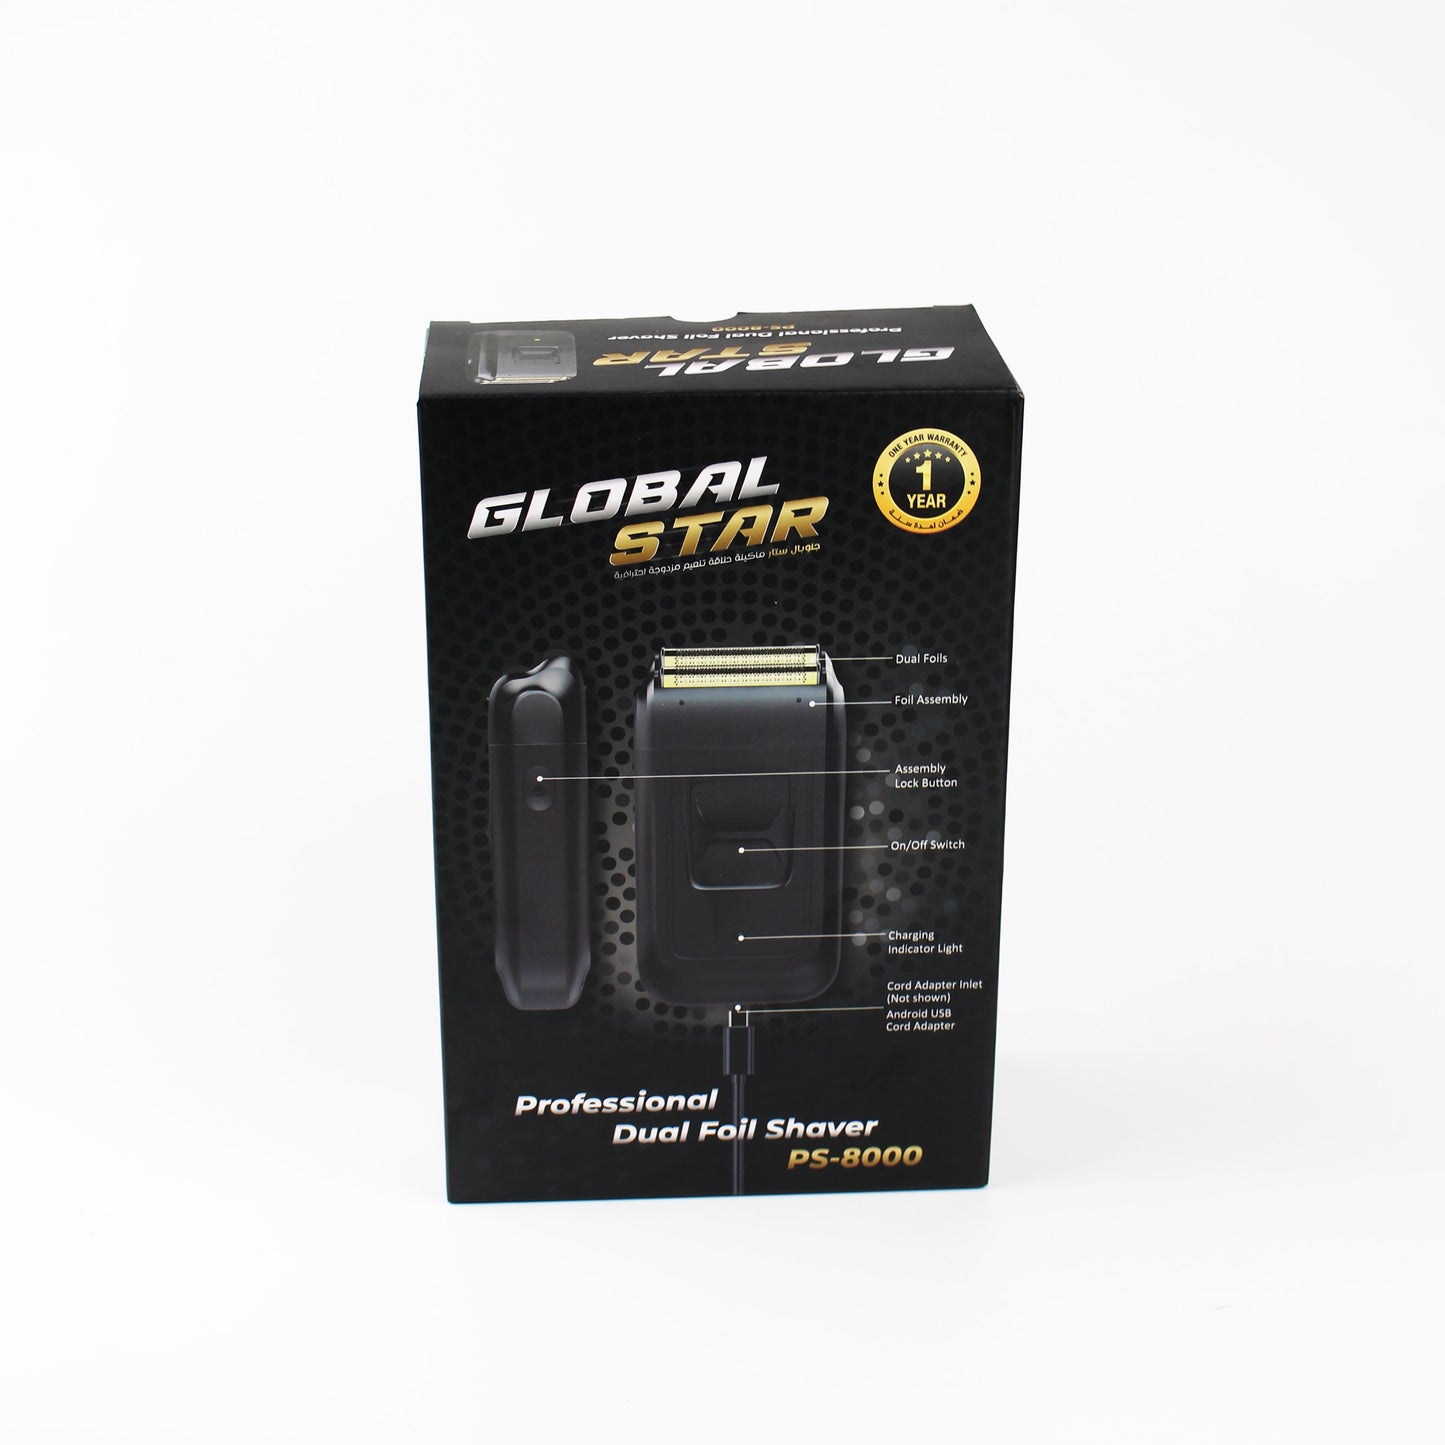 Globalstar - Professional Dual Foil Shaver PS-8000